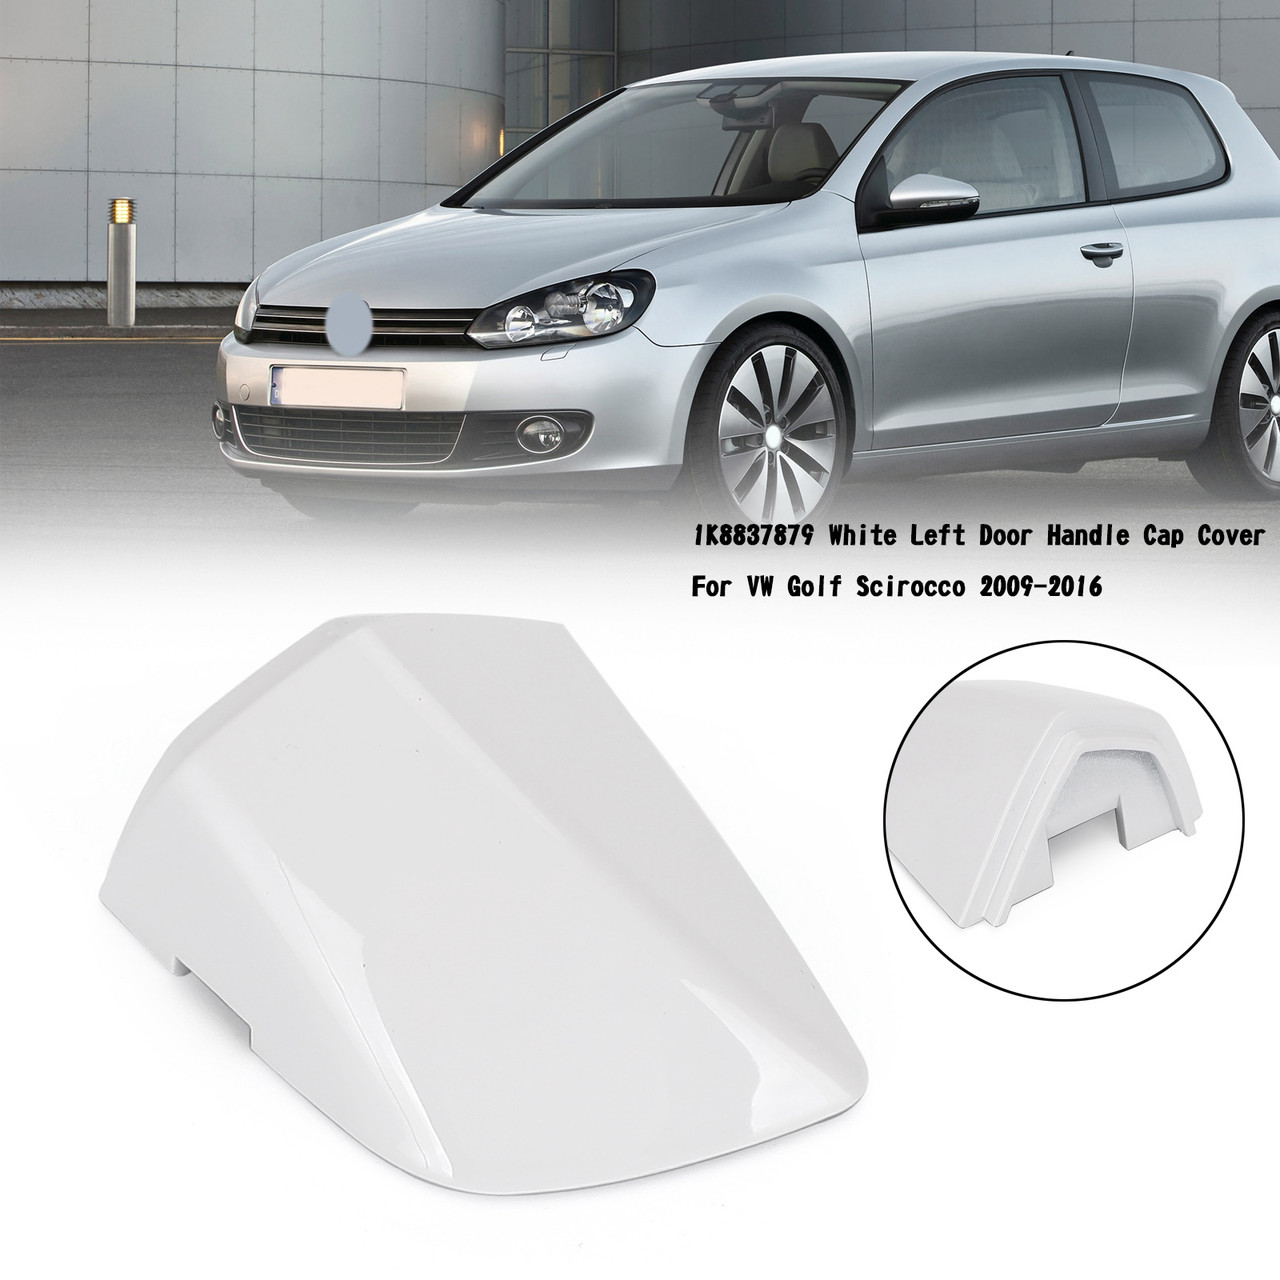 1K8837879 Left Door Handle Cap Cover Fit for VW Golf Scirocco 09-16 Sharan 11-16 White